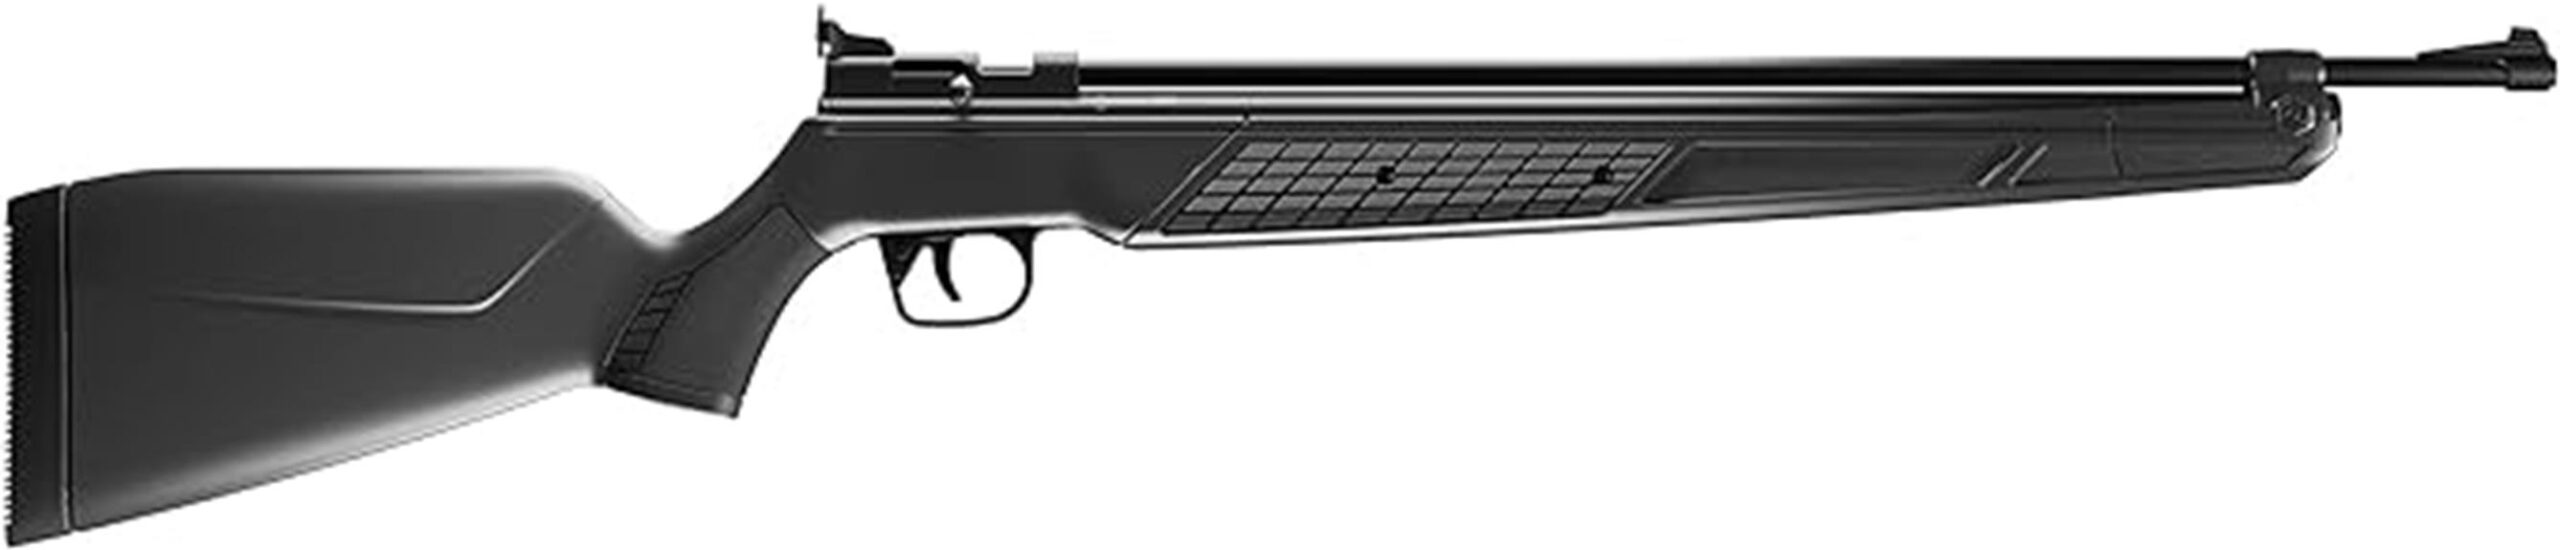 powerful 22 caliber pump rifle